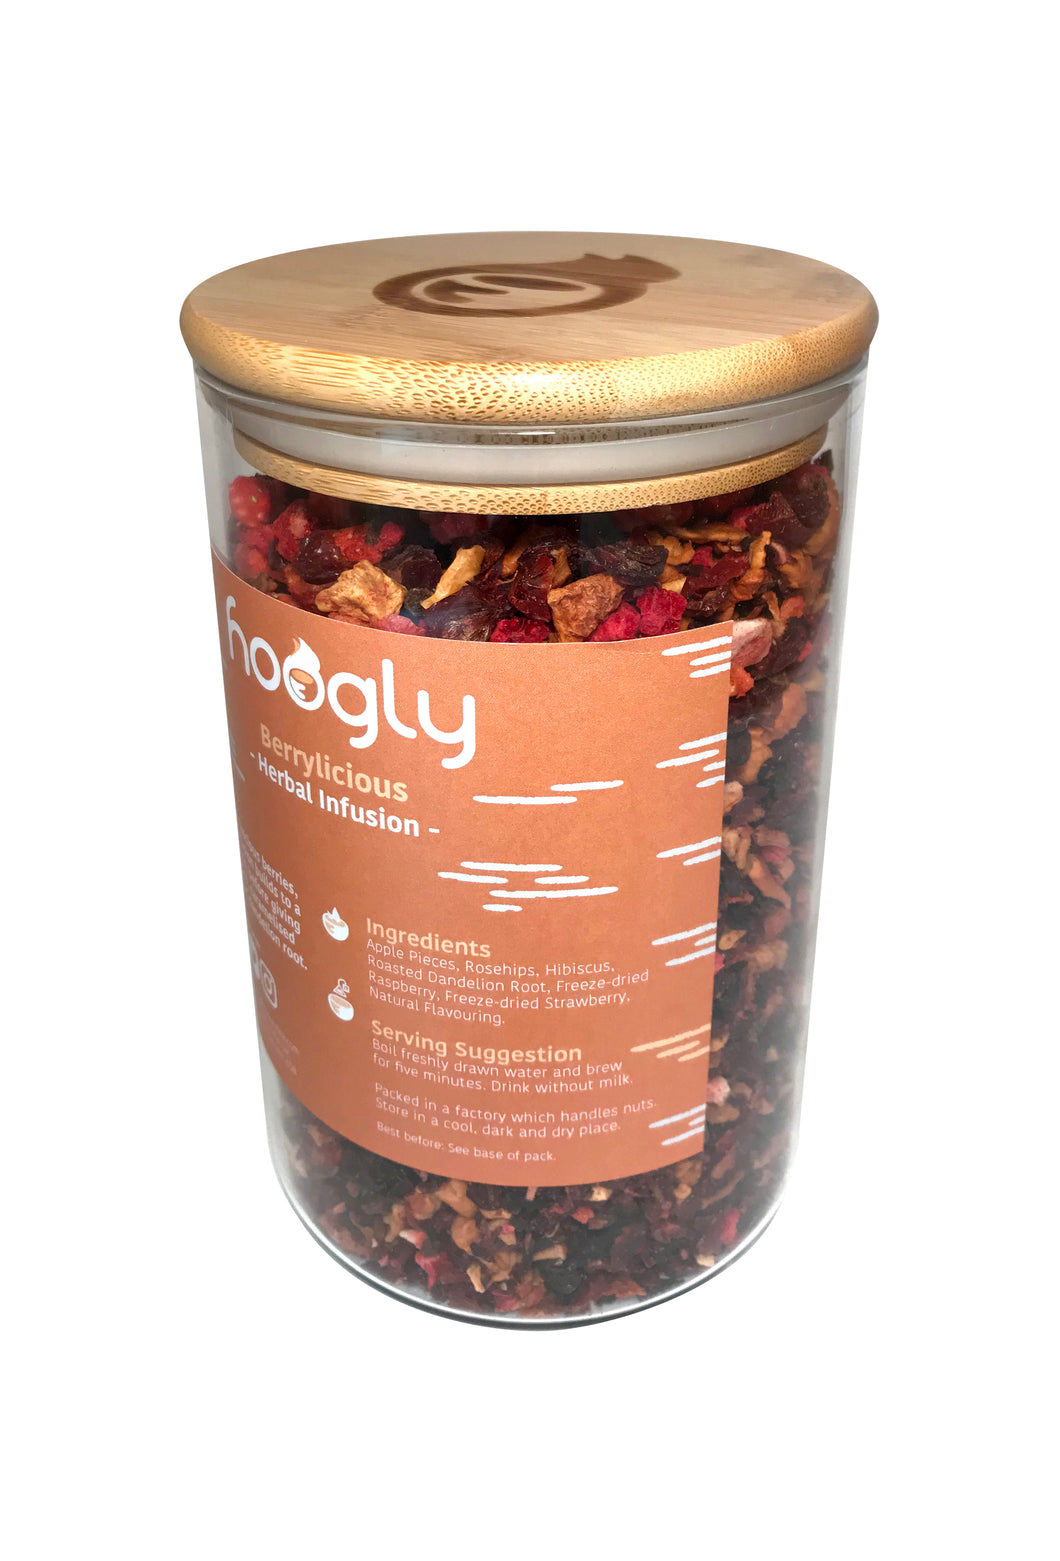 Berrylicious - Herbal Infusion - Retail Jars